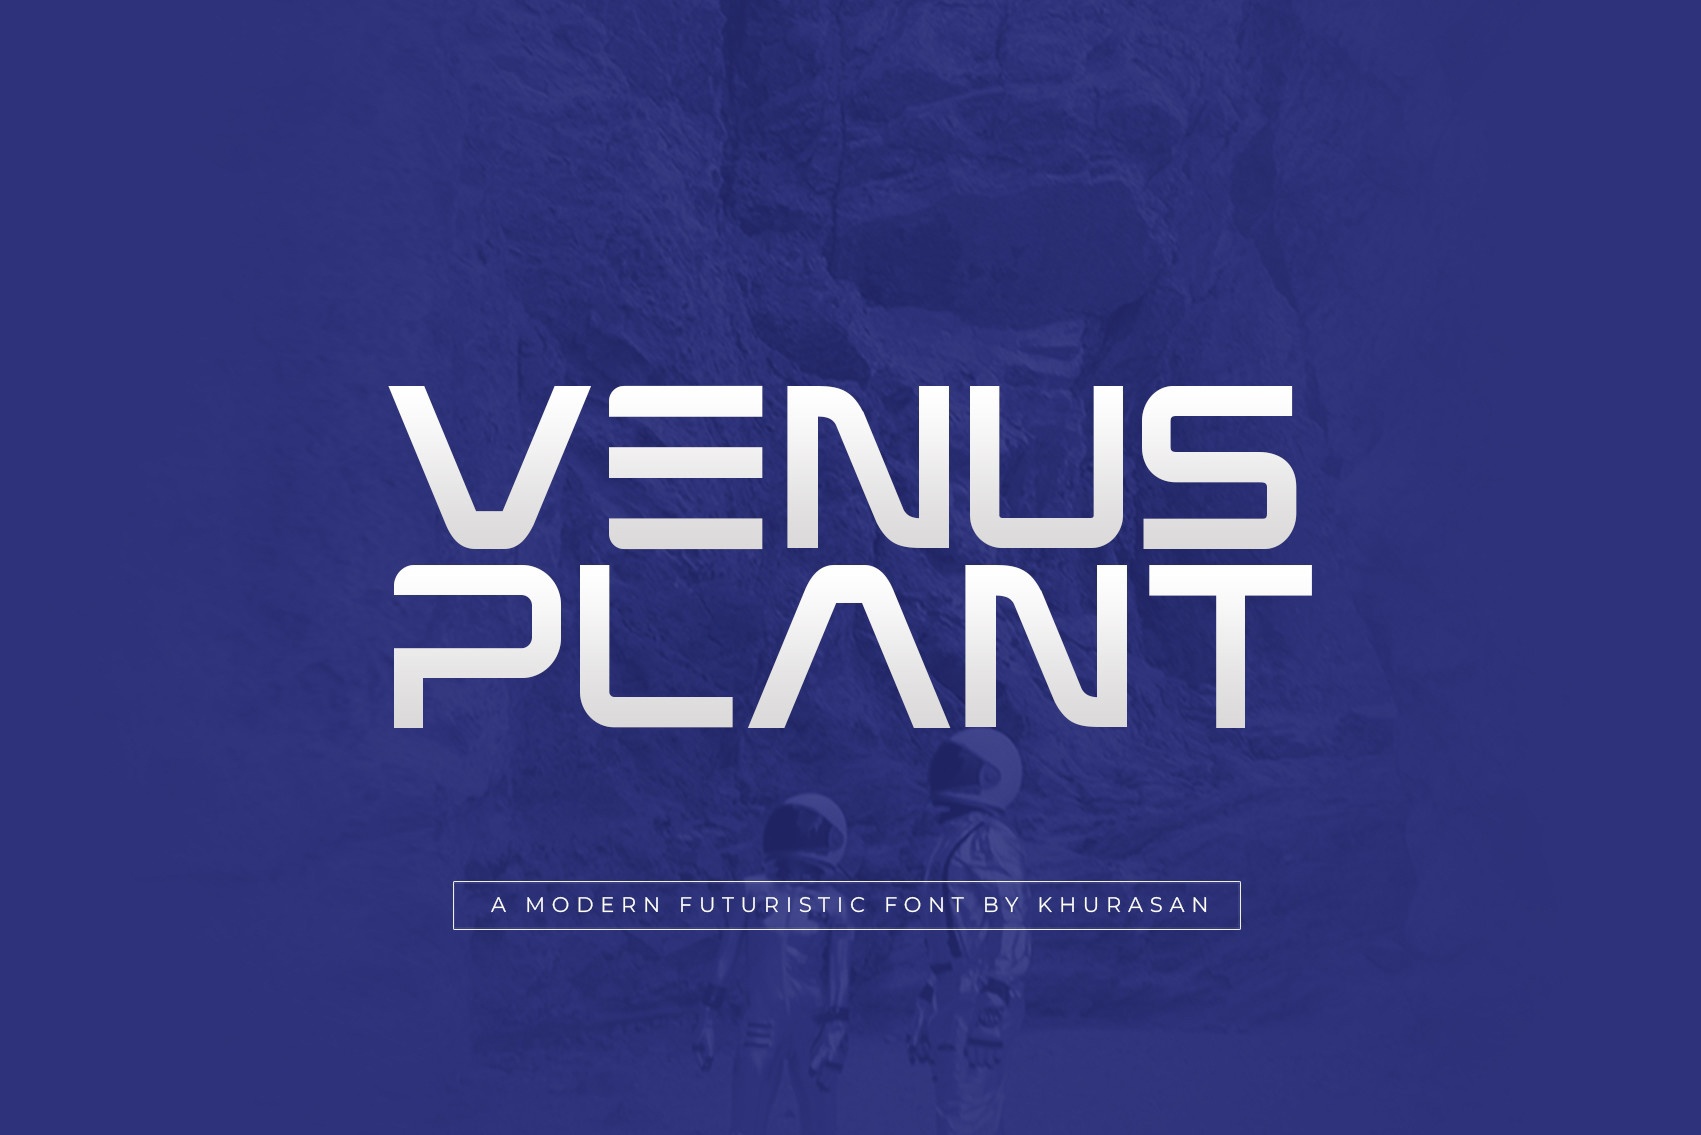 Venus Plant